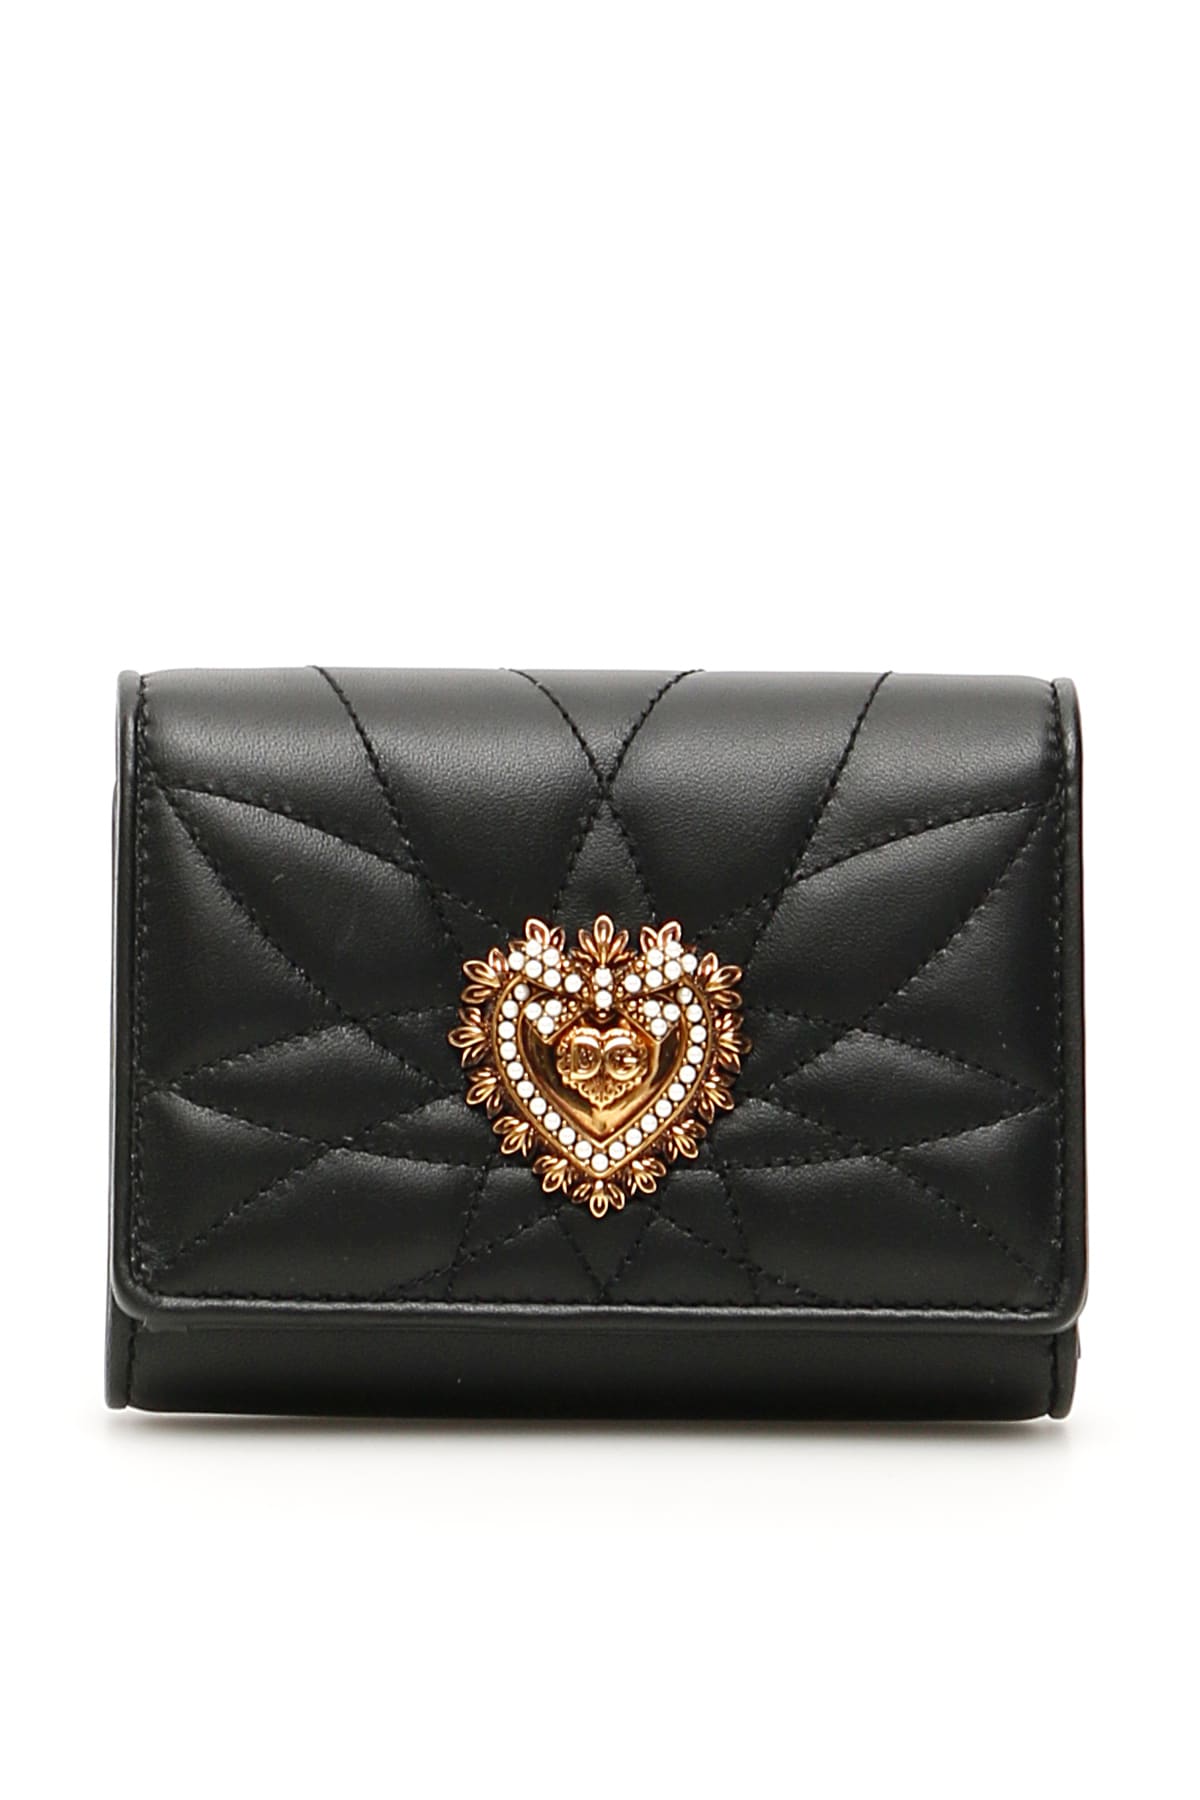 Dolce & Gabbana Devotion Matelasse Wallet